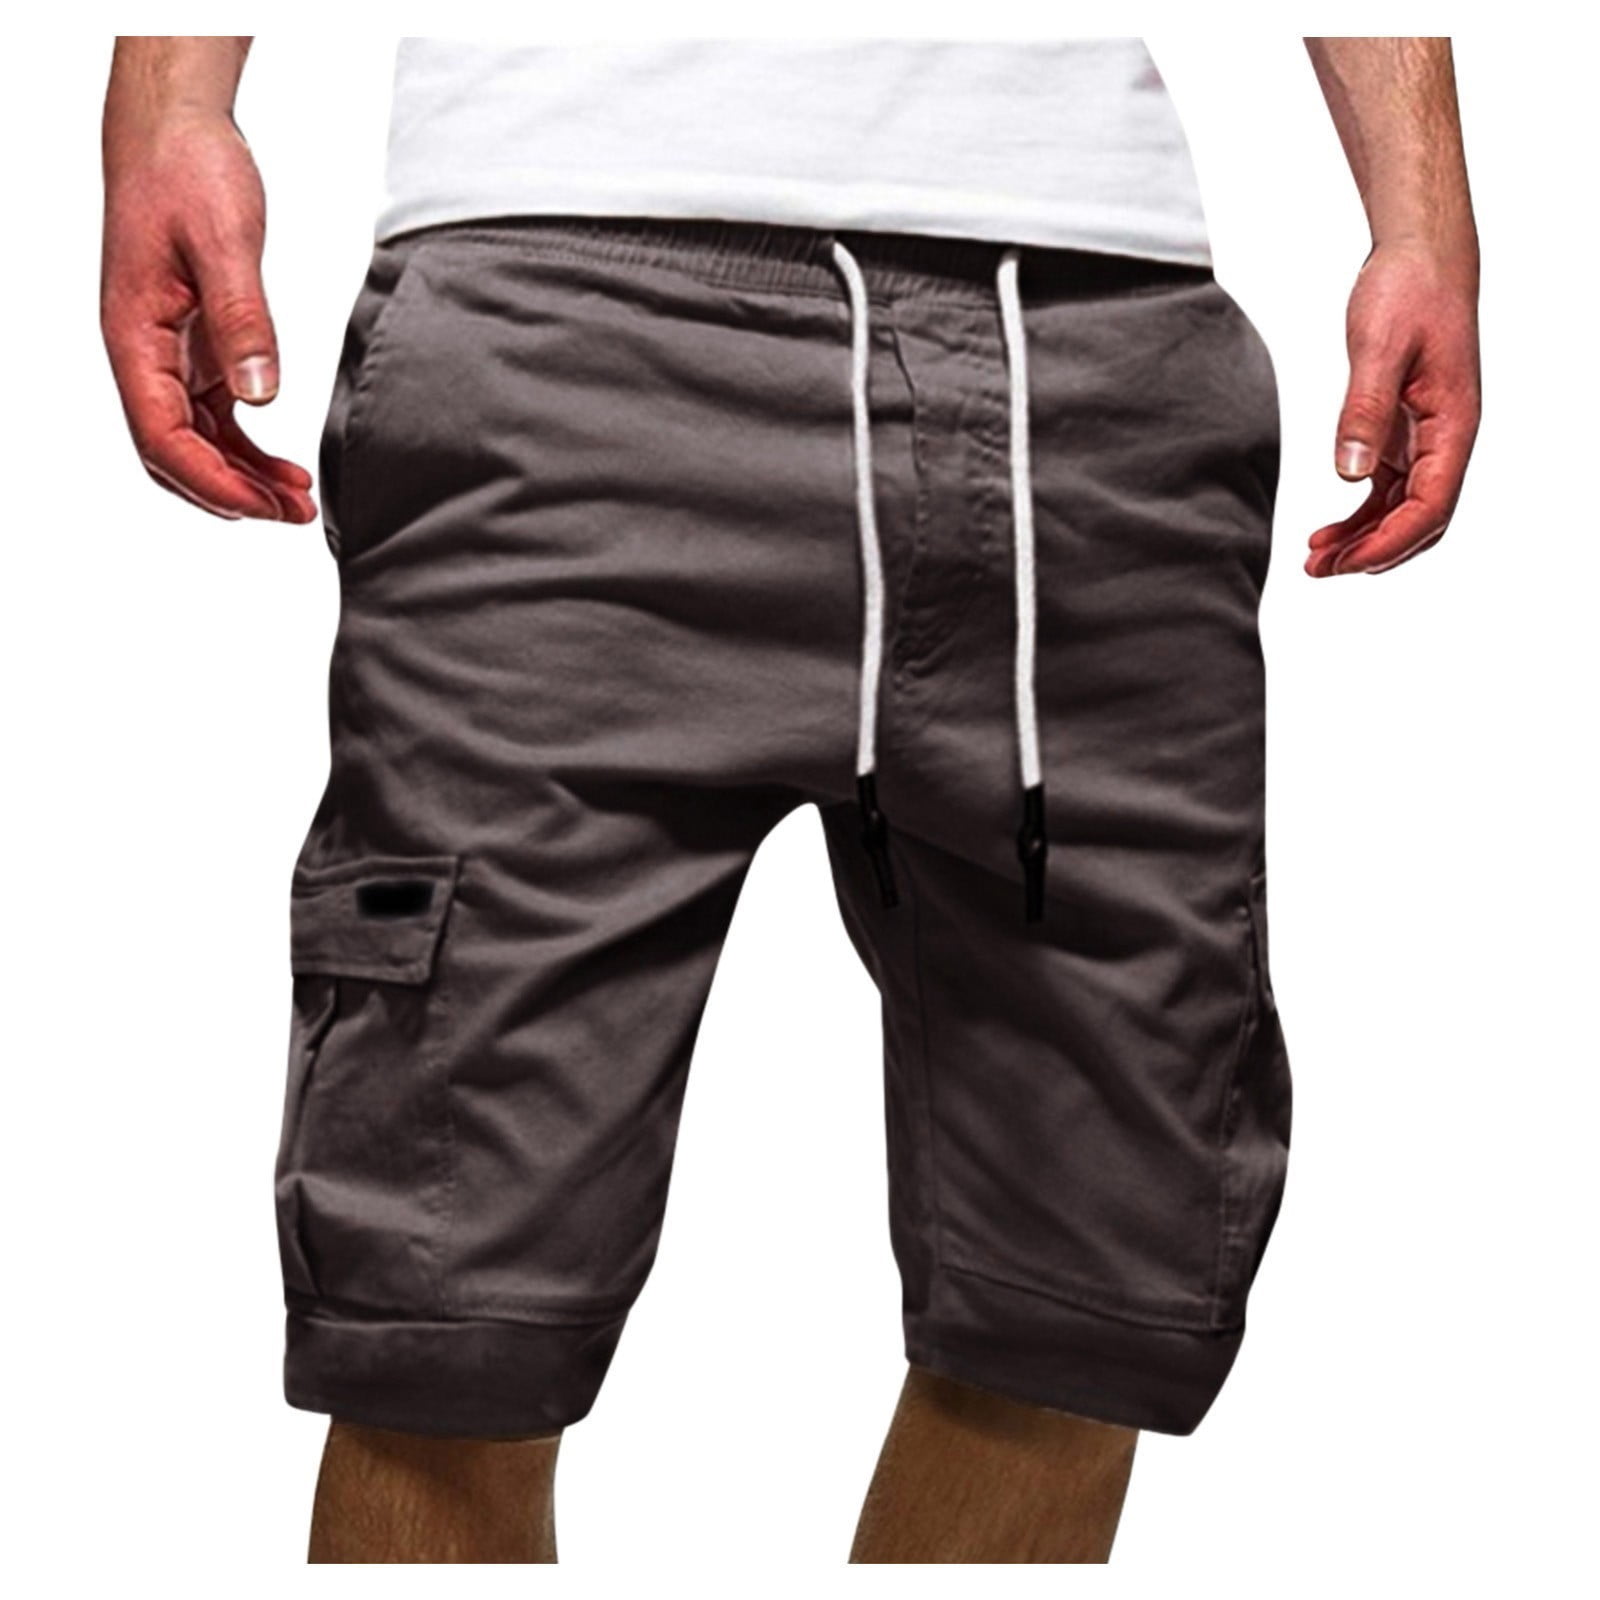 fvwitlyh Gymshark Shorts Men's Slim-fit 7 Inseam Stretch Short 